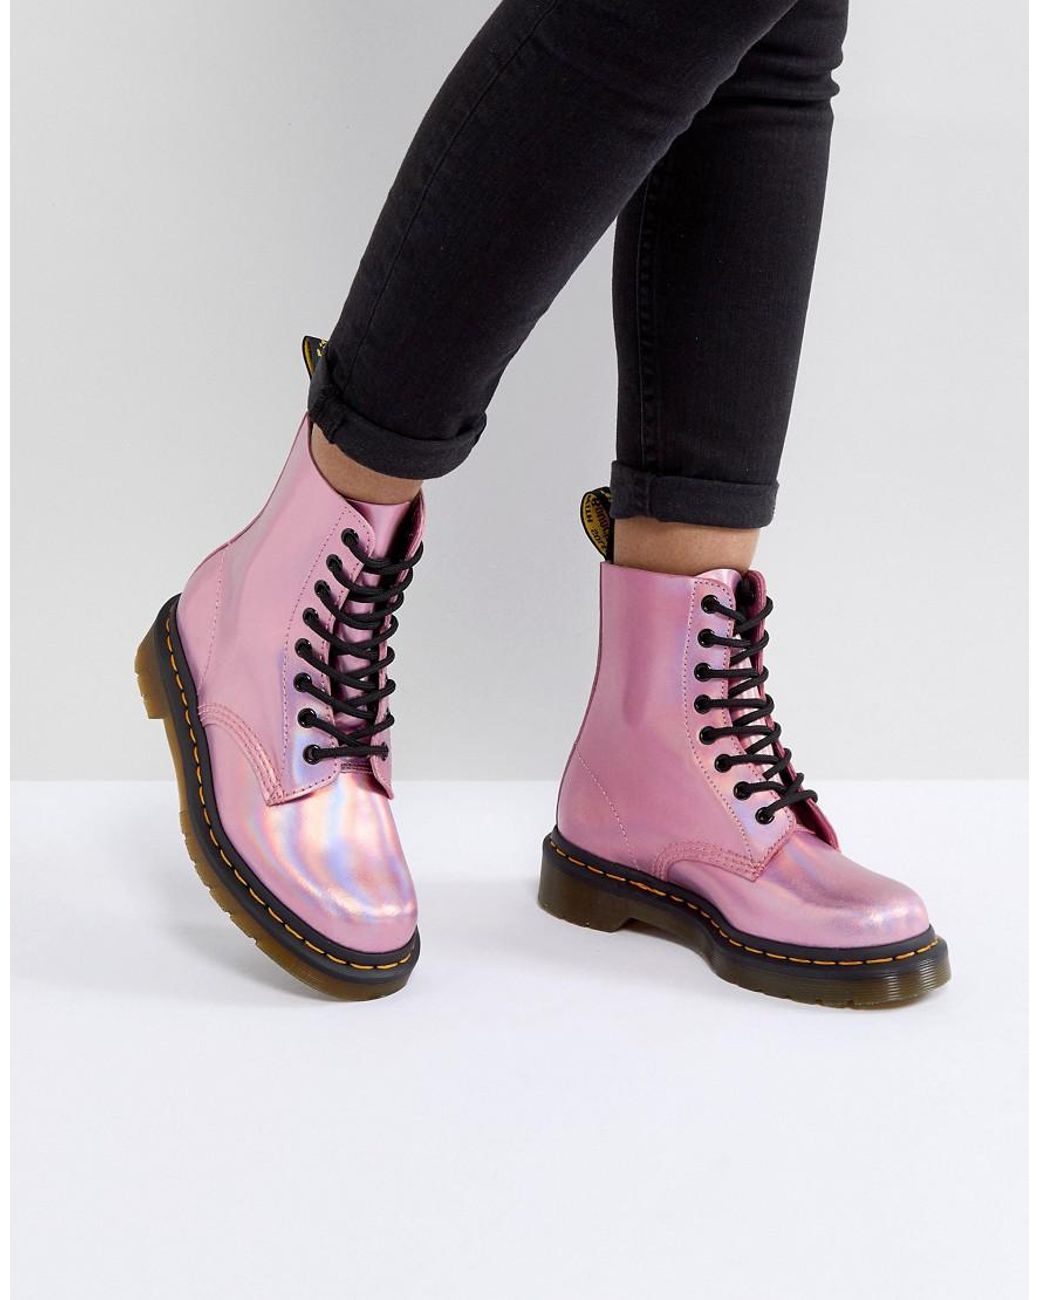 klei de sneeuw schoonmaken Dr. Martens Leather Holographic Pink Lace Up Boots | Lyst Canada